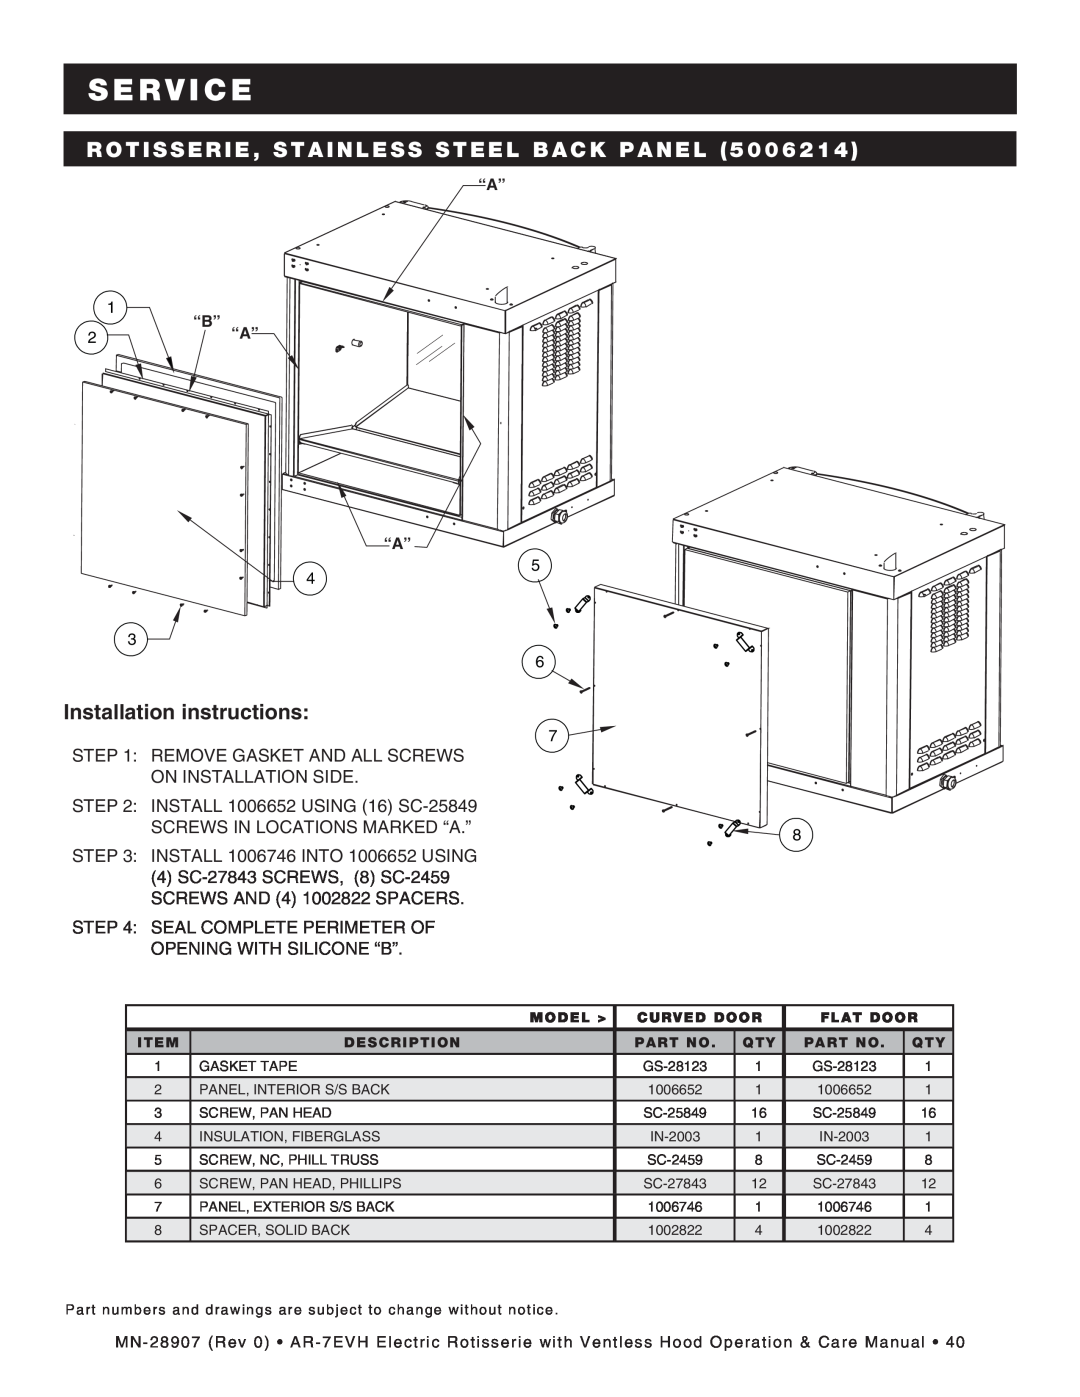 Alto-Shaam ar-7evh manual Rotisserie, Stainless Steel Back Panel, Installation instructions, S E R V I C E 